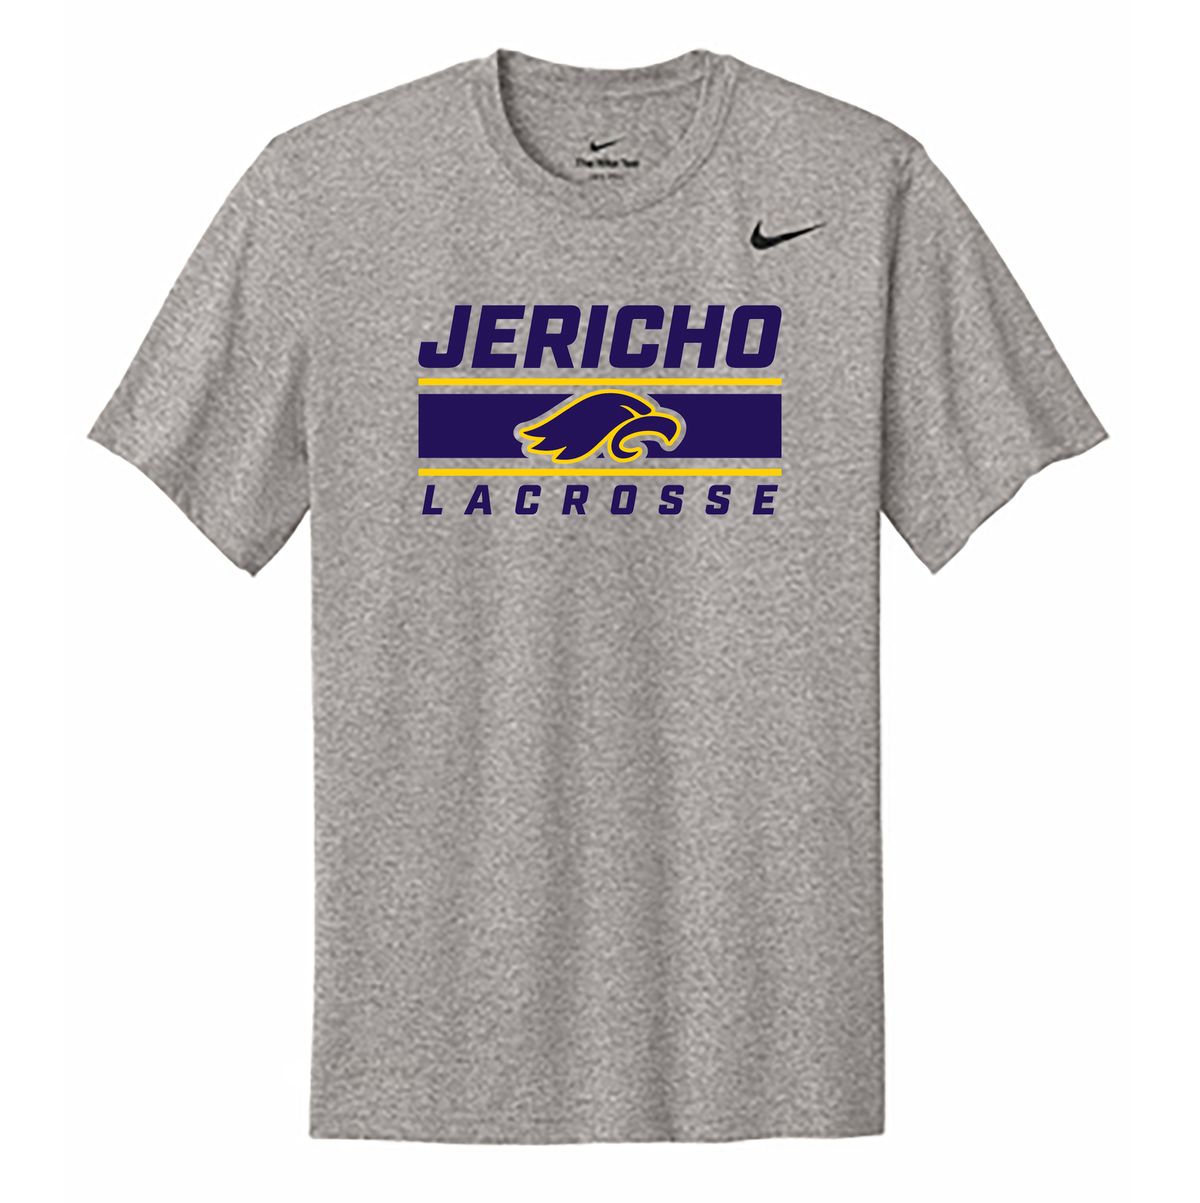 Jericho HS Lacrosse Nike rLegend Tee